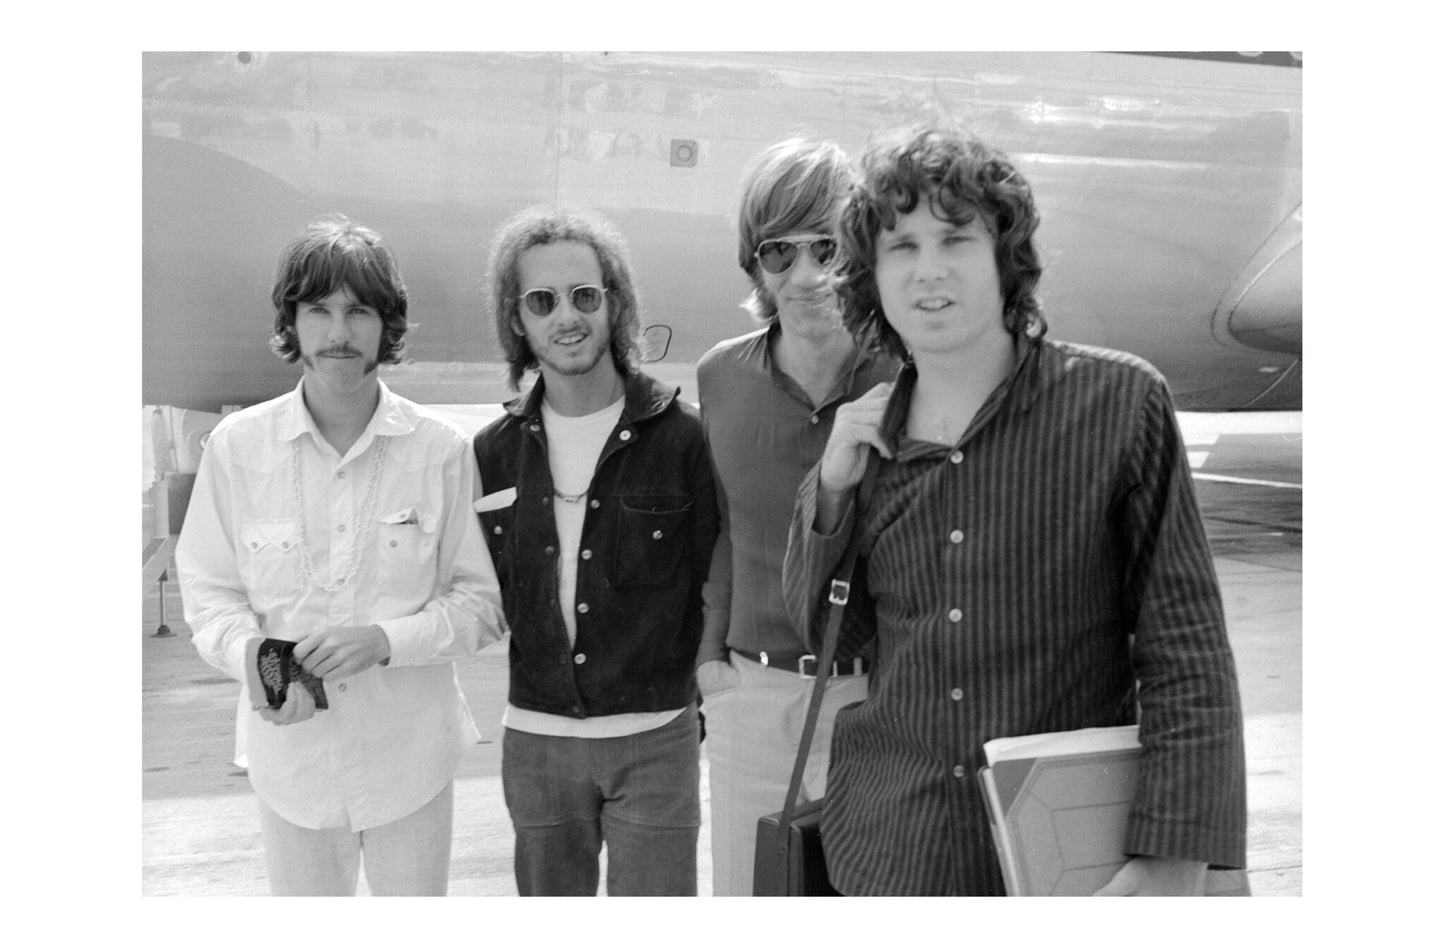 The Doors - Band at London's Heathrow Airport, 1968 Print 1